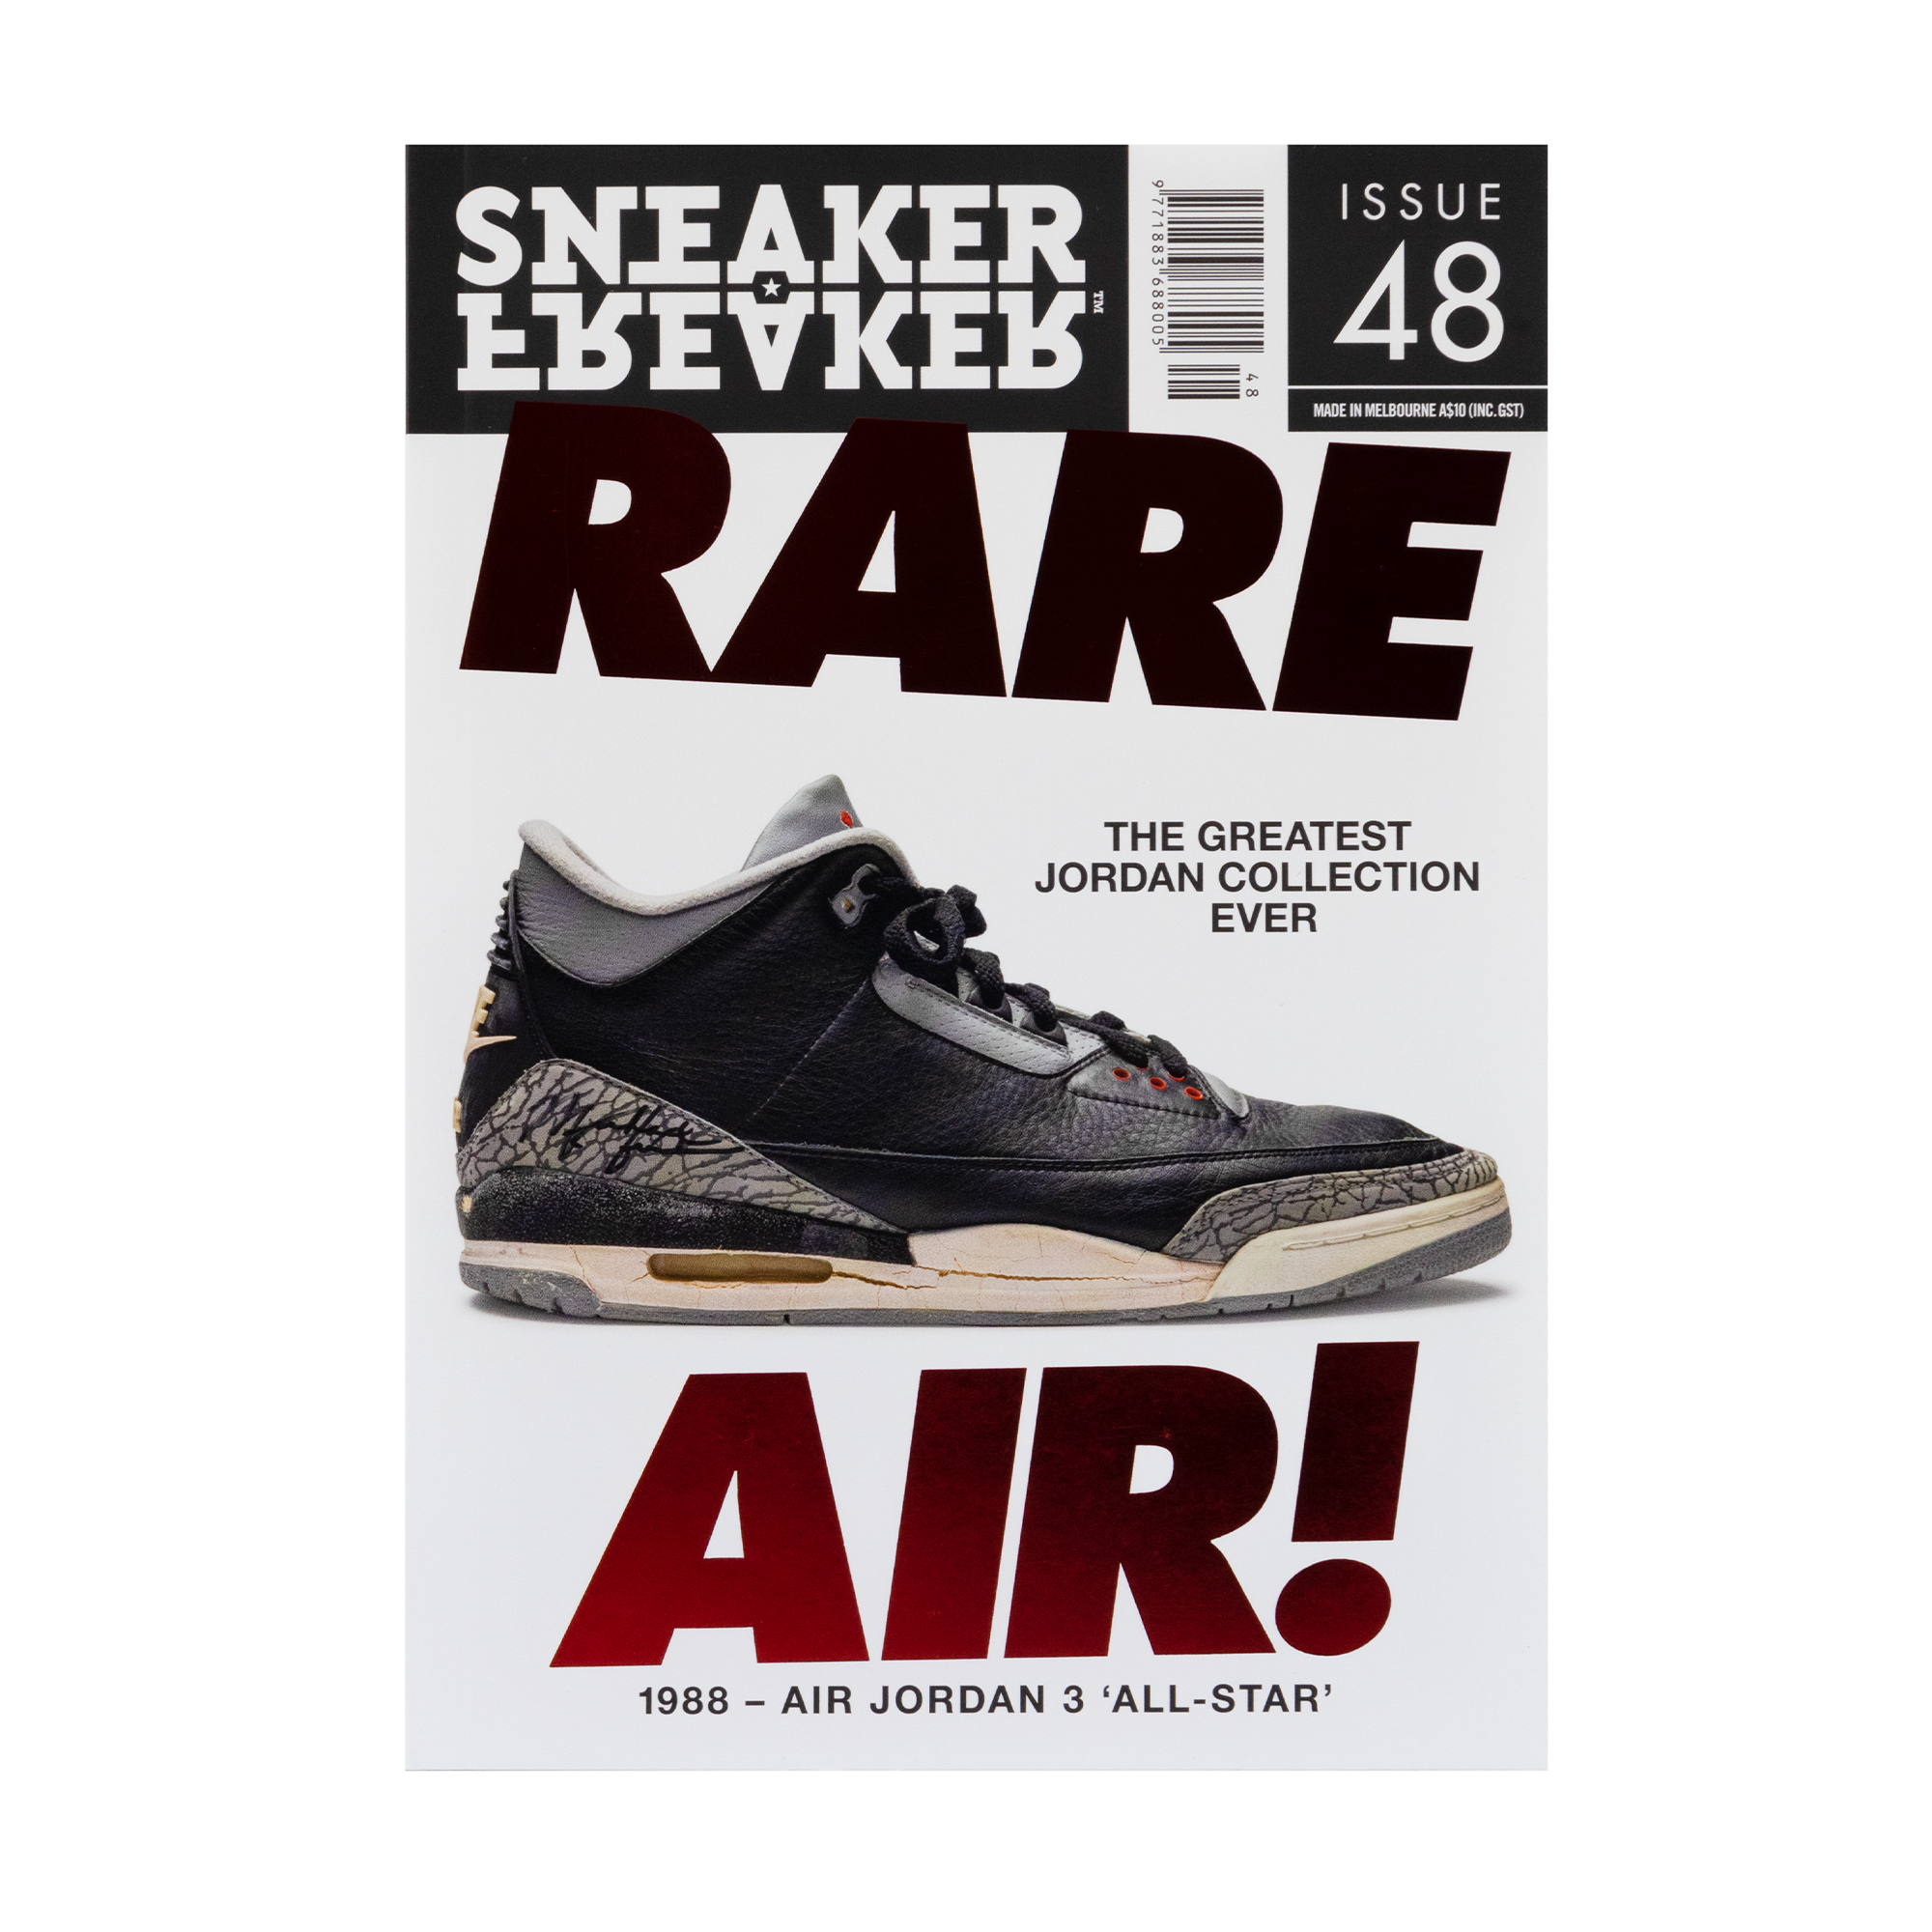 Sneaker Freaker - Issue 48